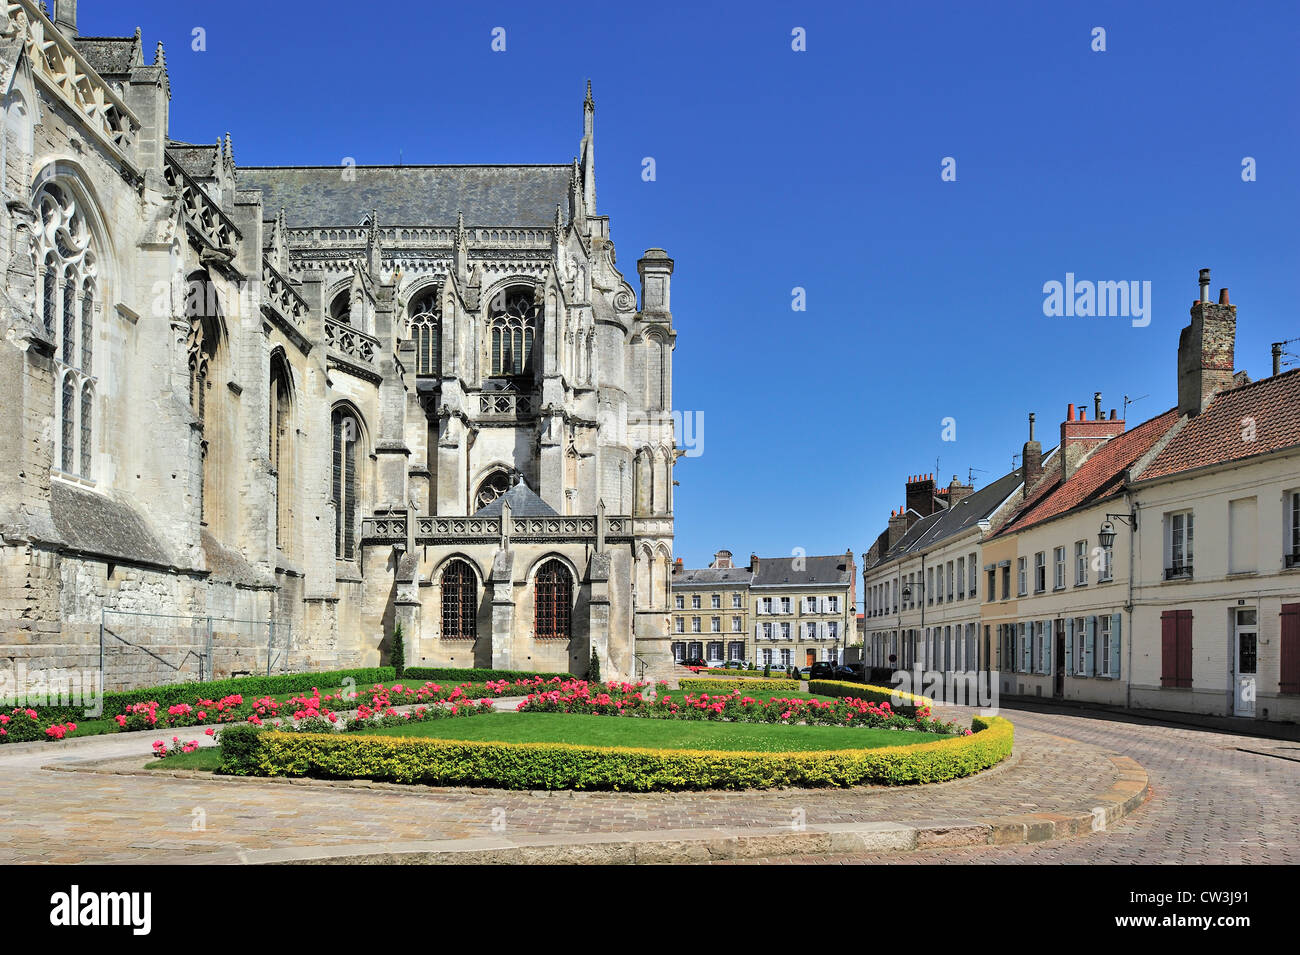 The Saint-Omer Cathedral / Cathédrale Notre-Dame de Saint-Omer at Sint-Omaars, Nord-Pas-de-Calais, France Stock Photo